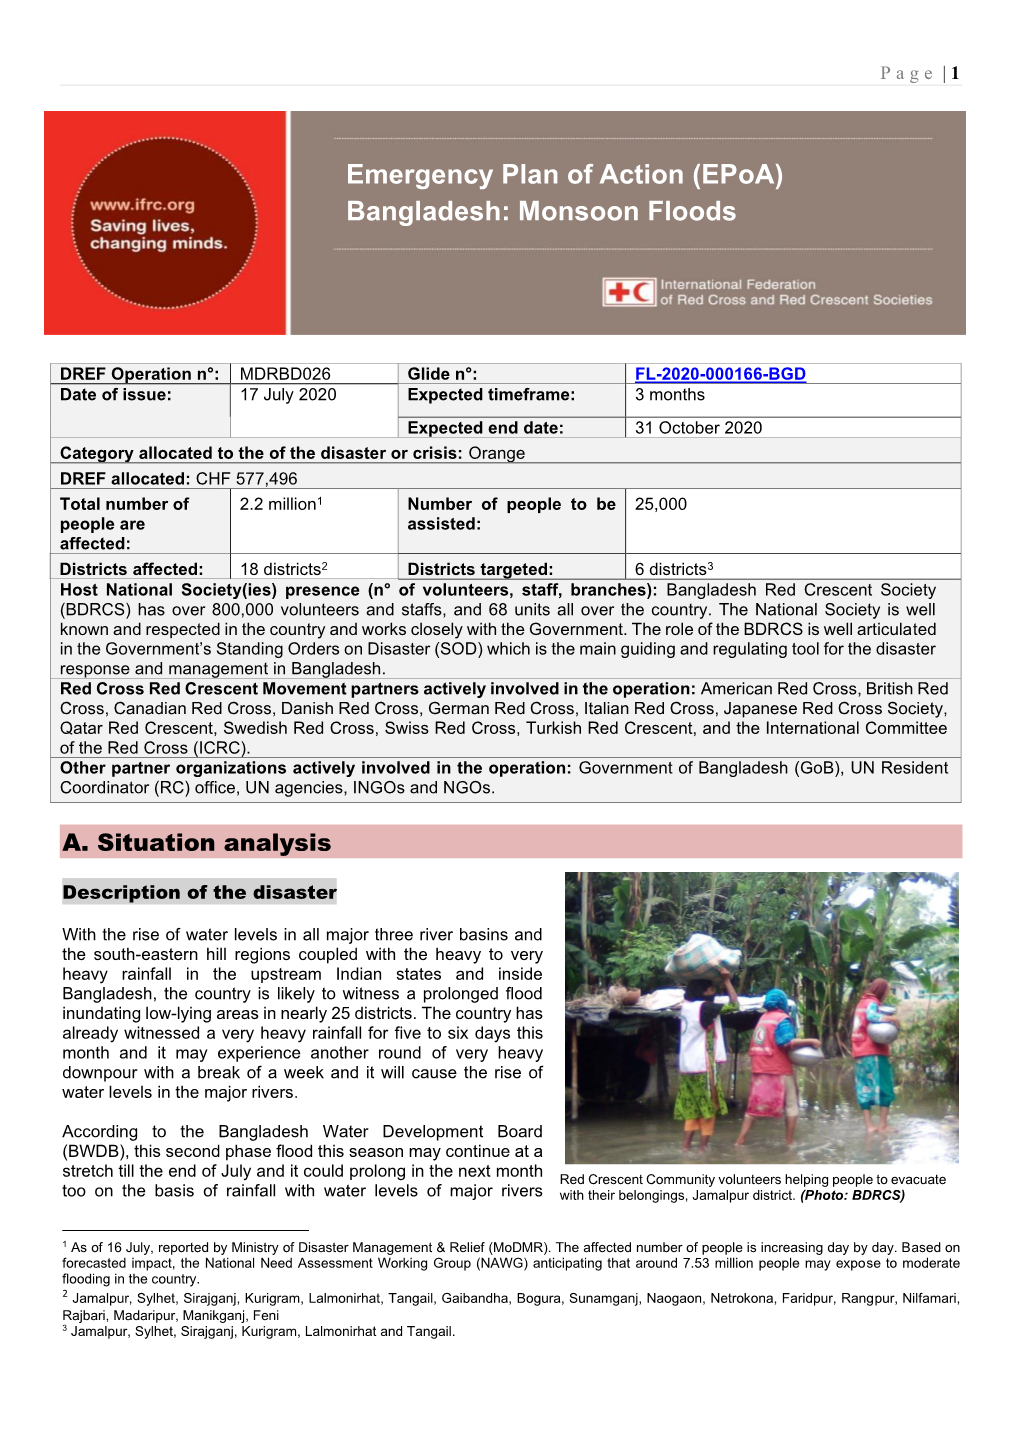 Bangladesh: Monsoon Floods